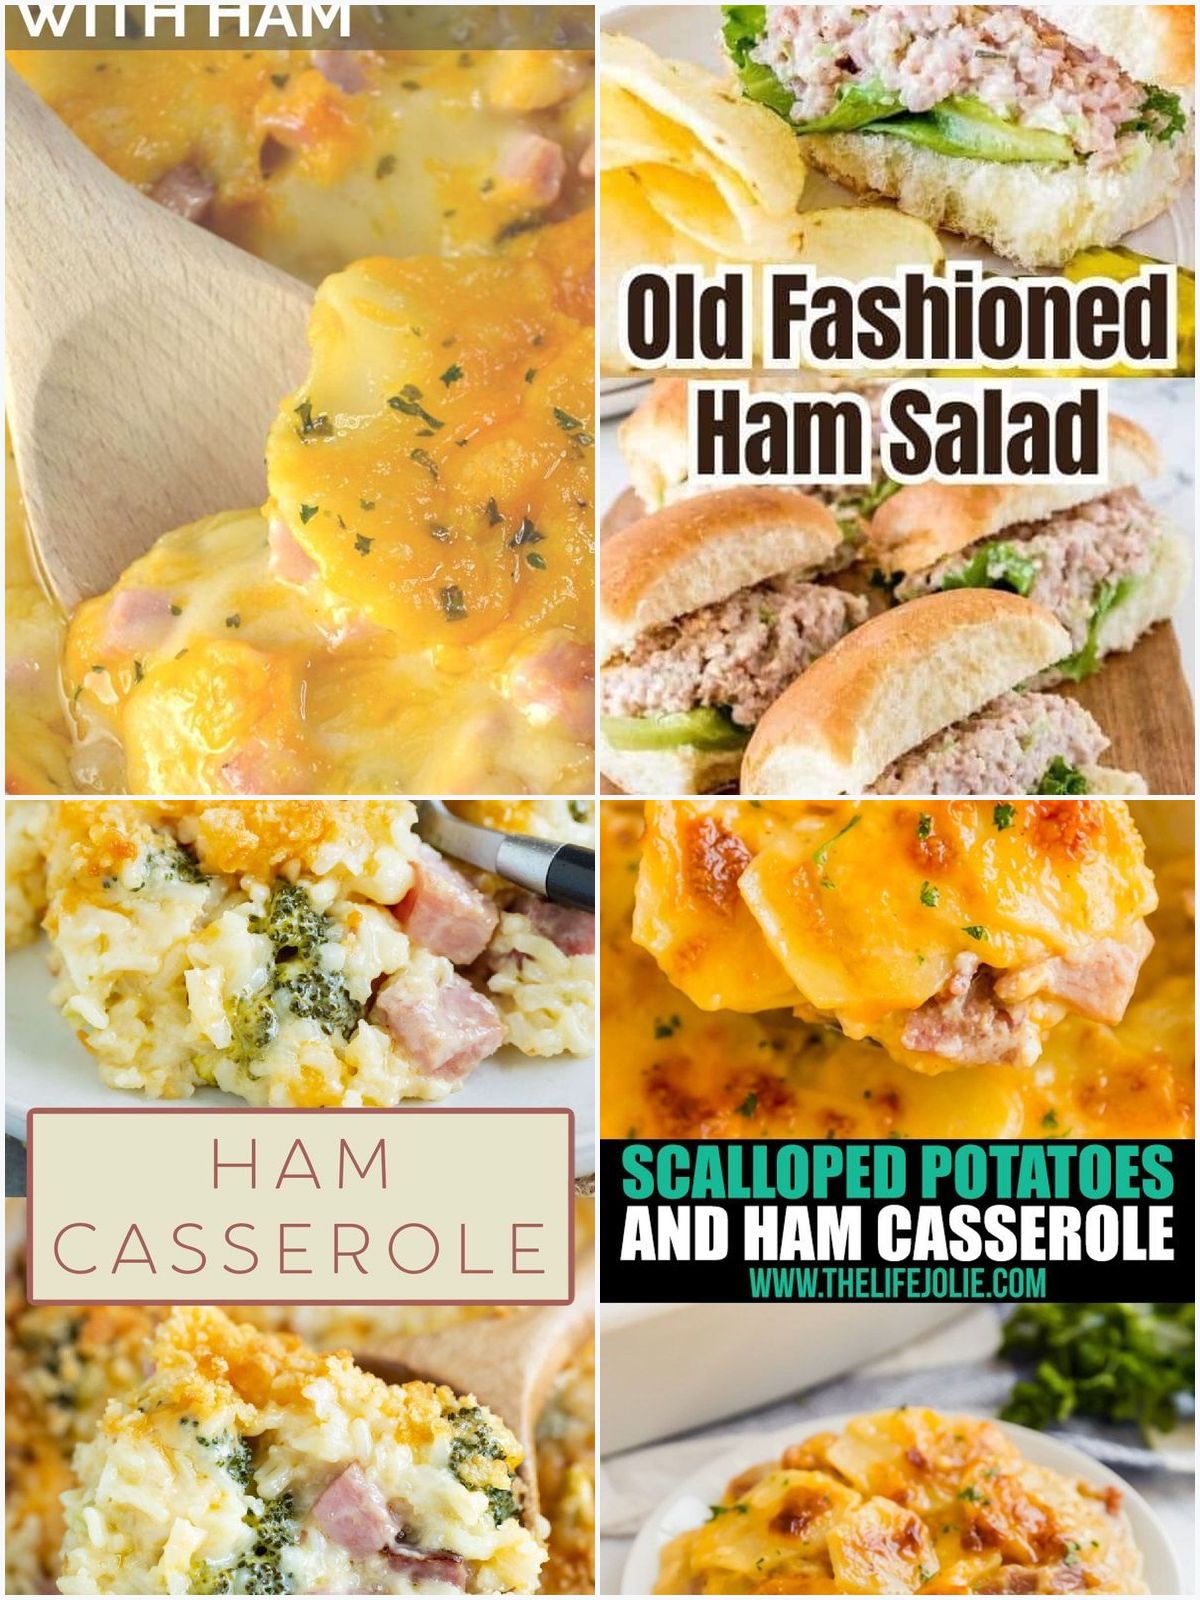 My favorite ideas for leftover ham recipes